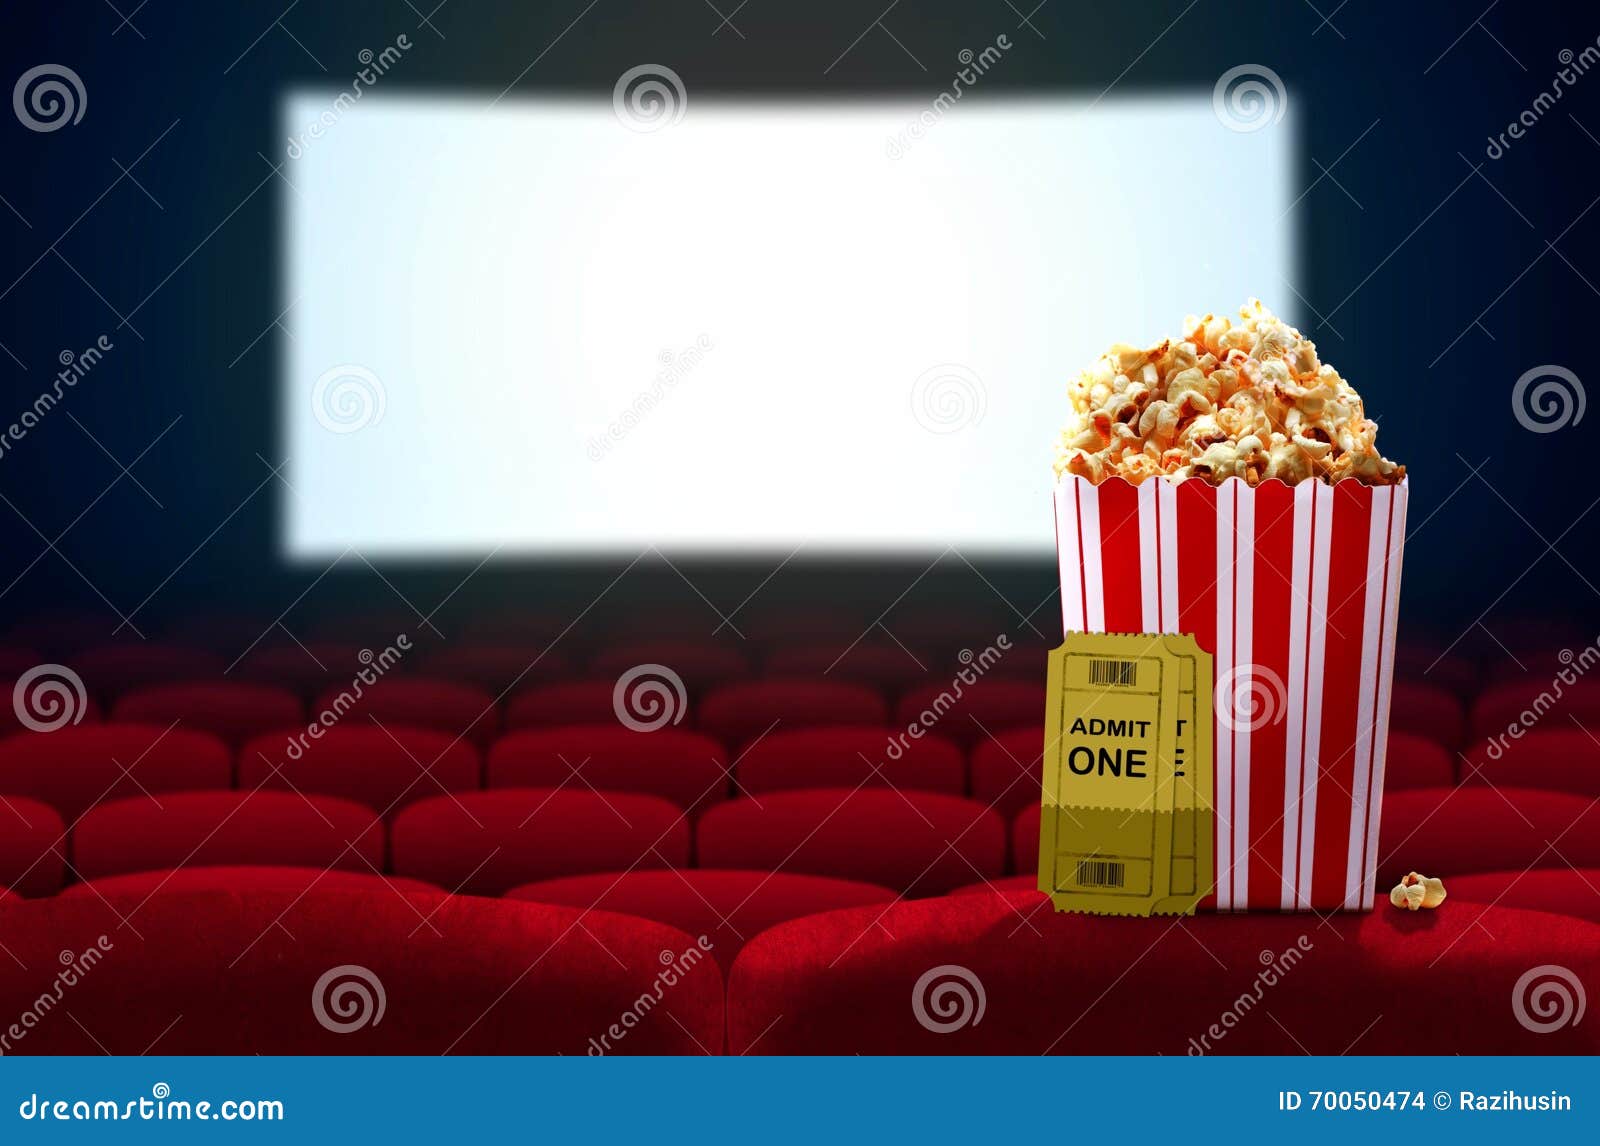 cinema seat and pop corn